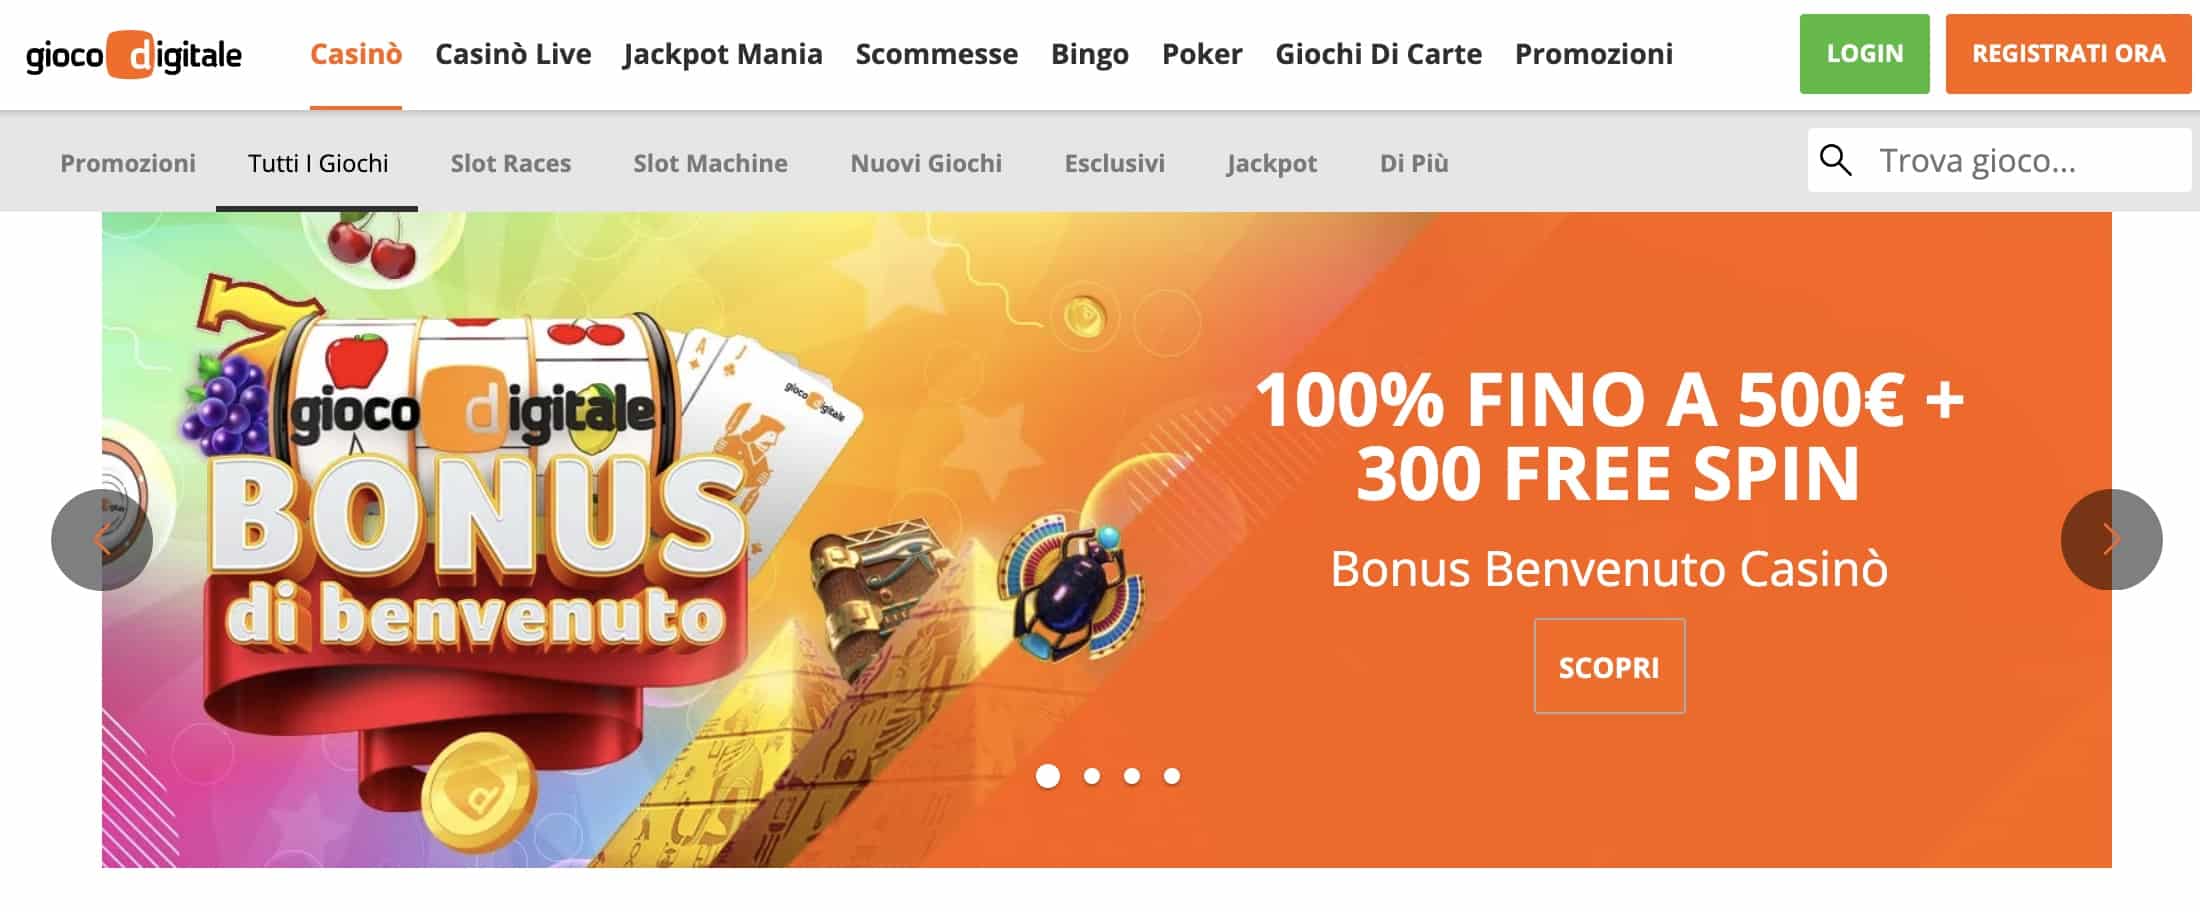 Digital Game Casino Bonuses